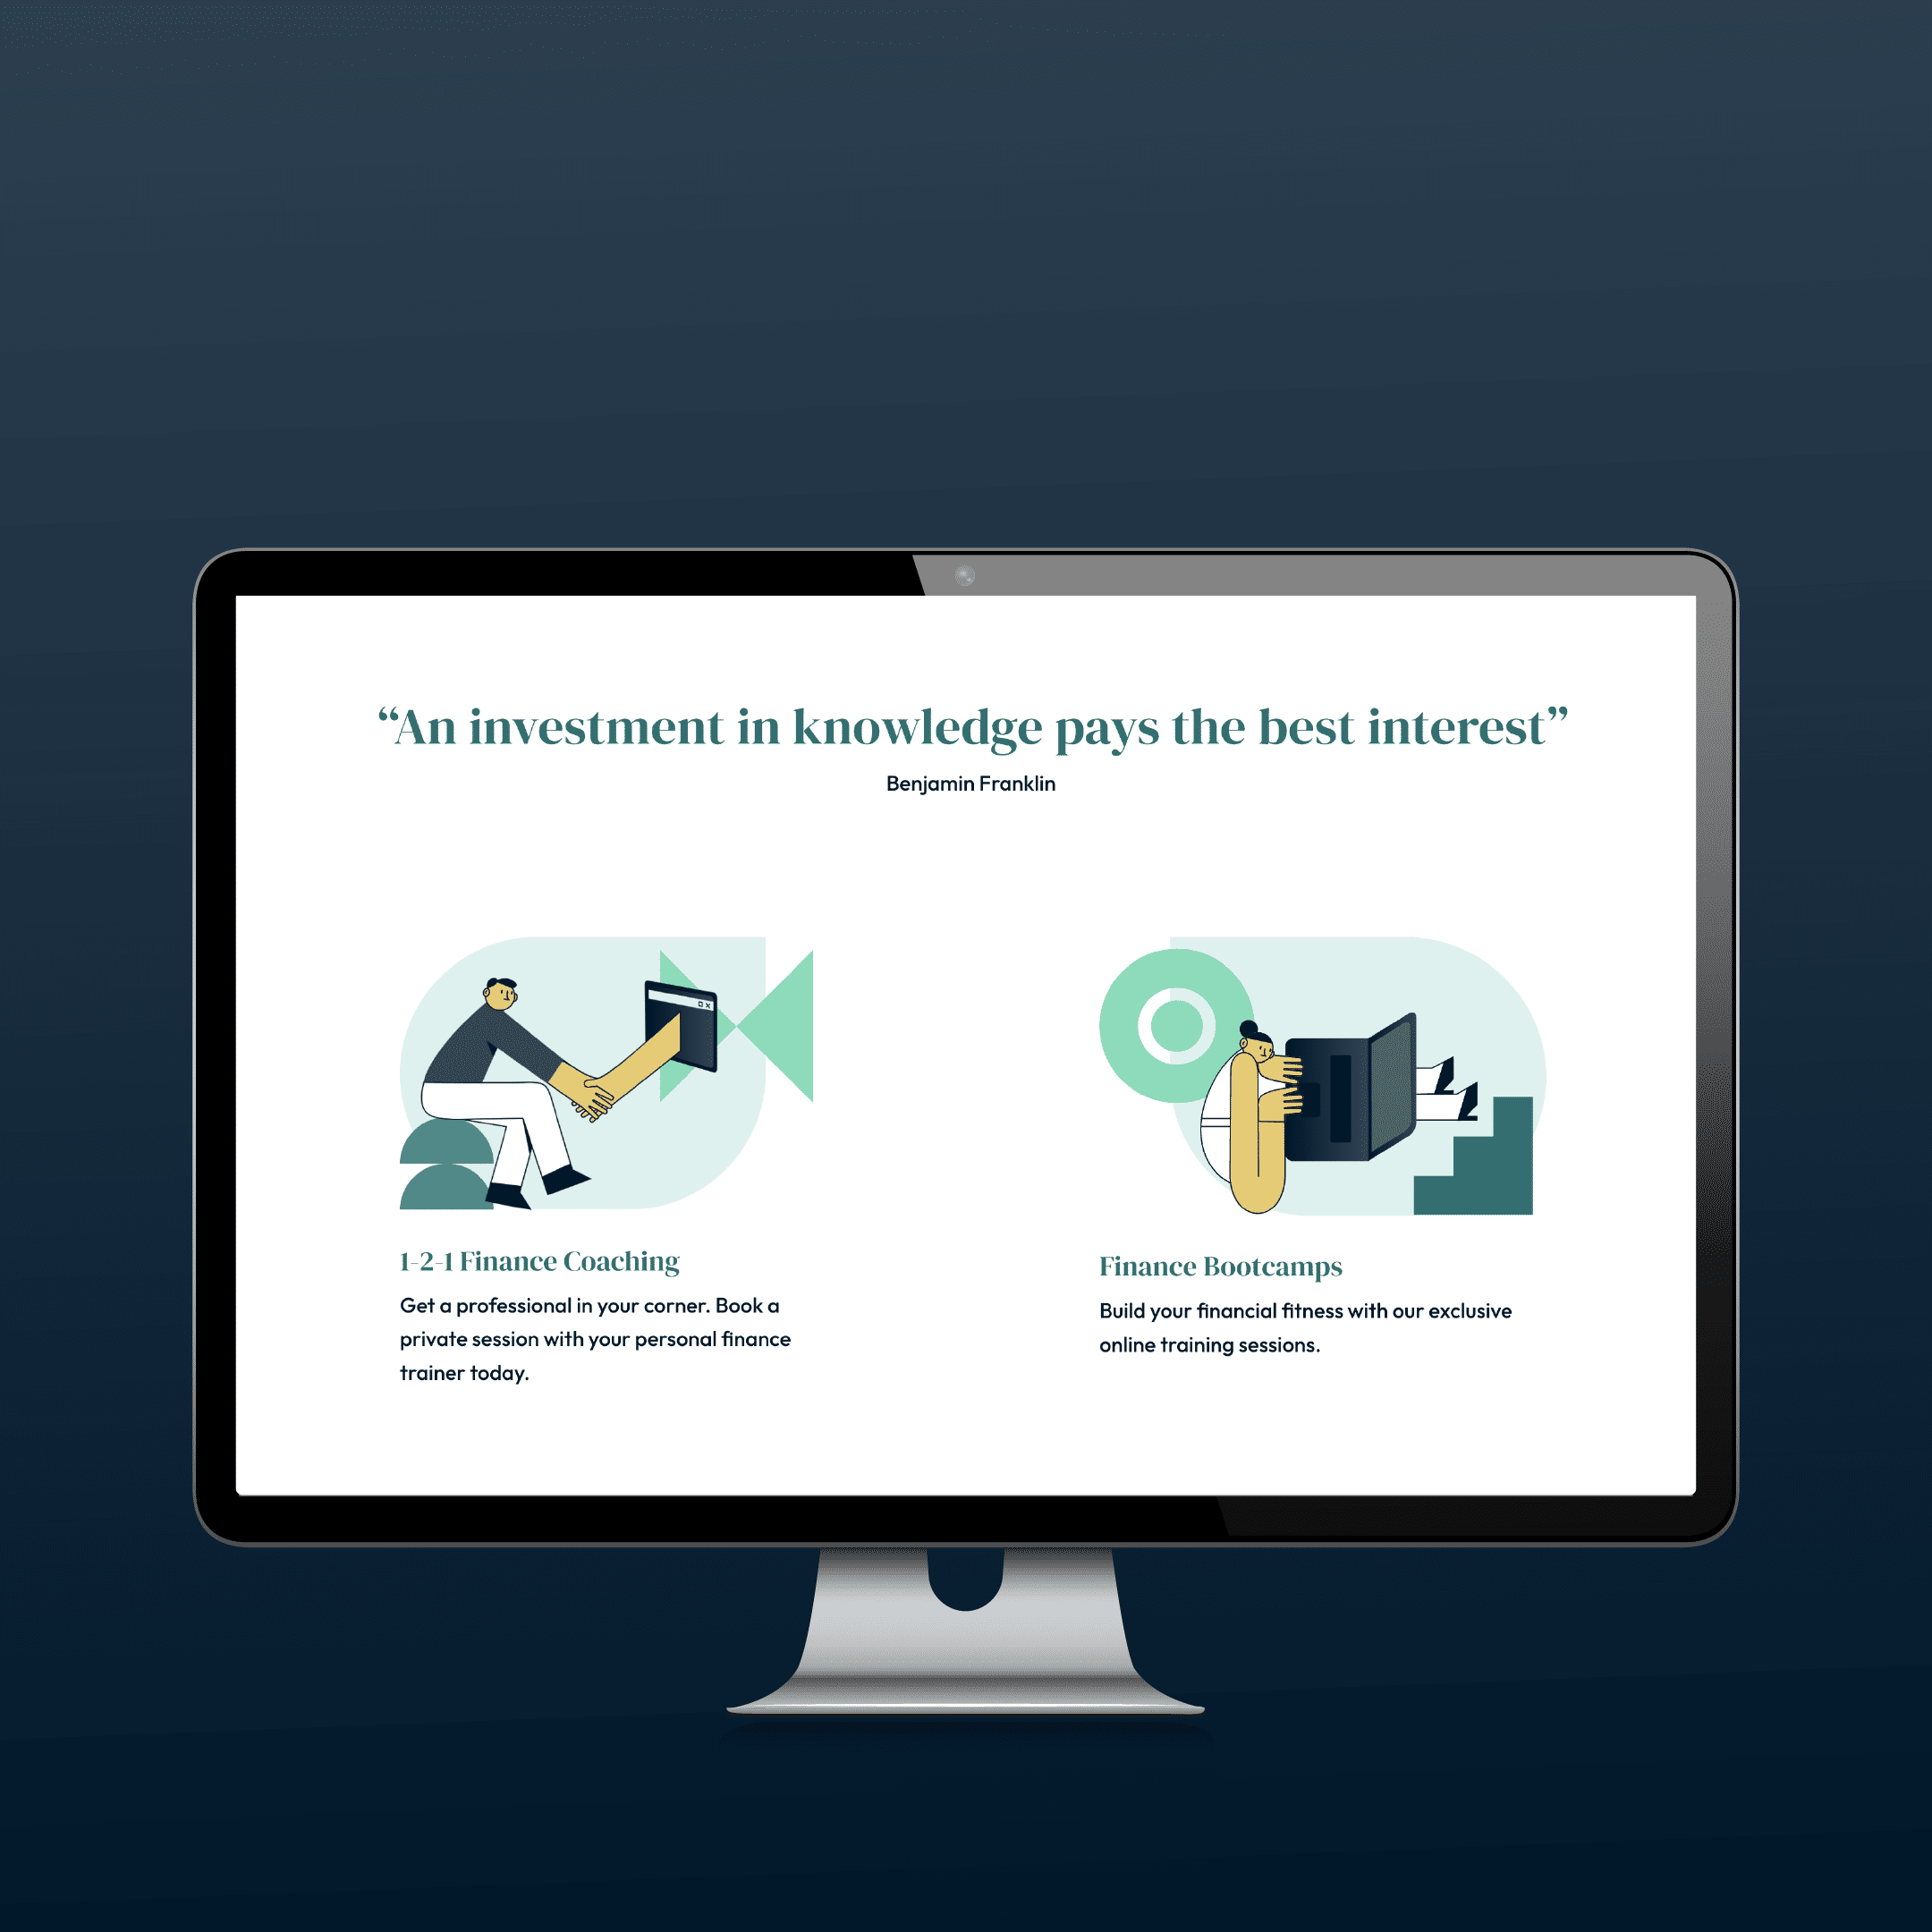 Financial Health Club - brand + website design